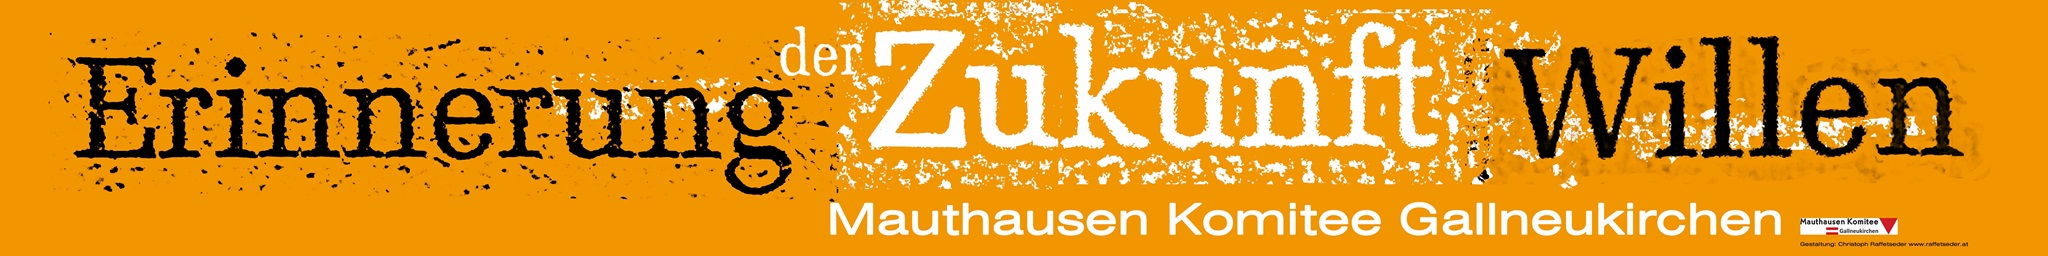 logo Mauthausen Komitee Gallneukirchen